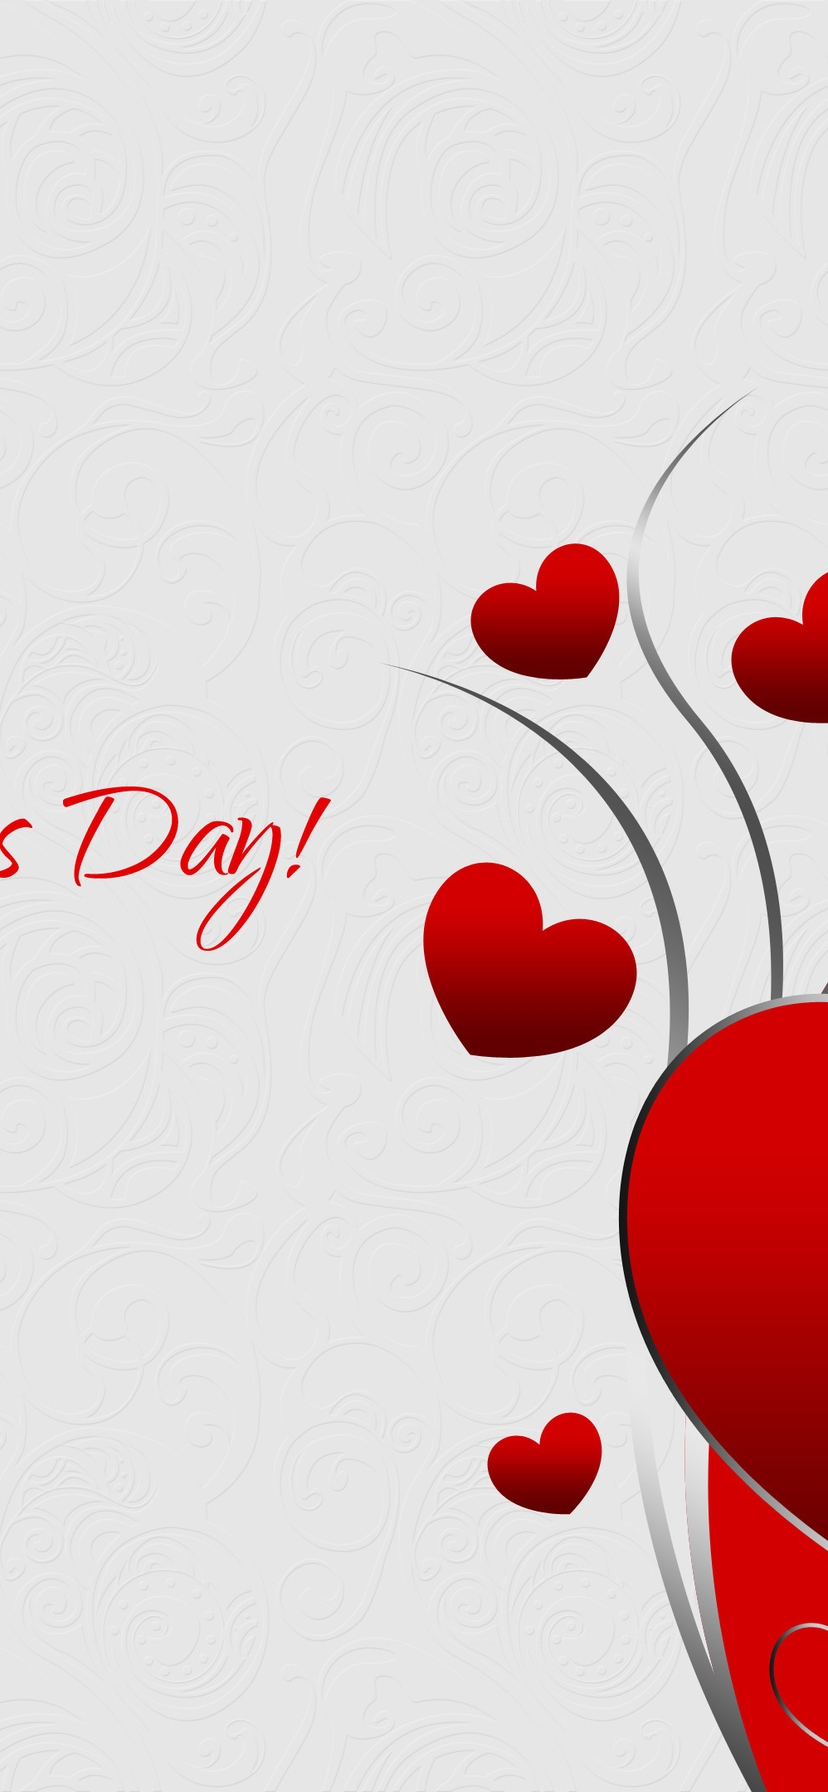 Image: Valentine's, day, February, 14, love, hearts, red, swirls, white, background